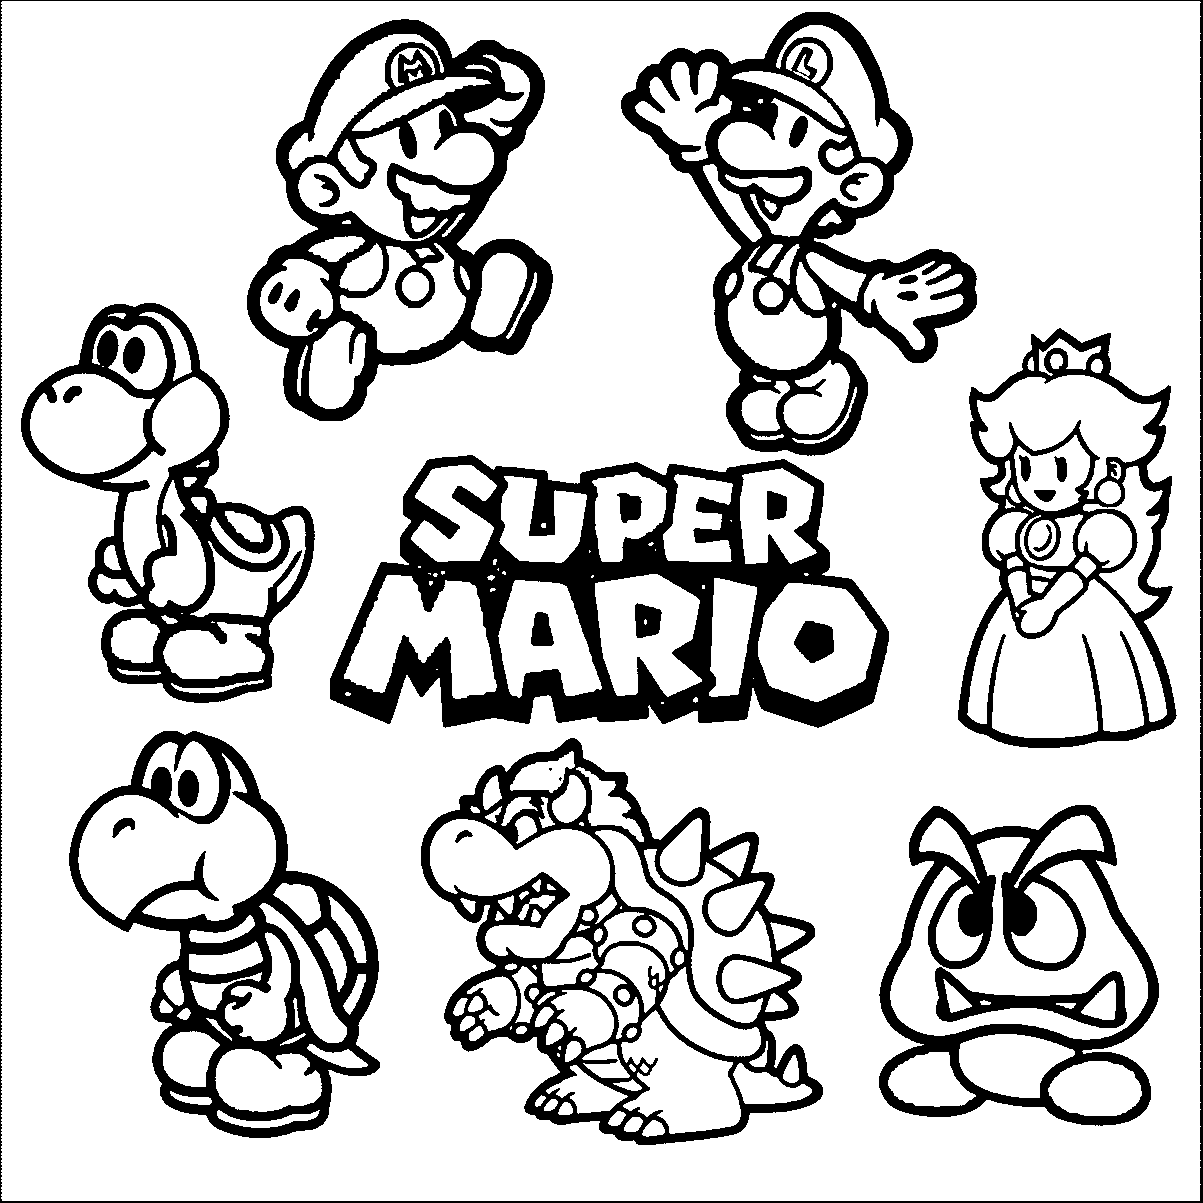 Super Mario Coloring Pages Pdf - Coloringfolder.com